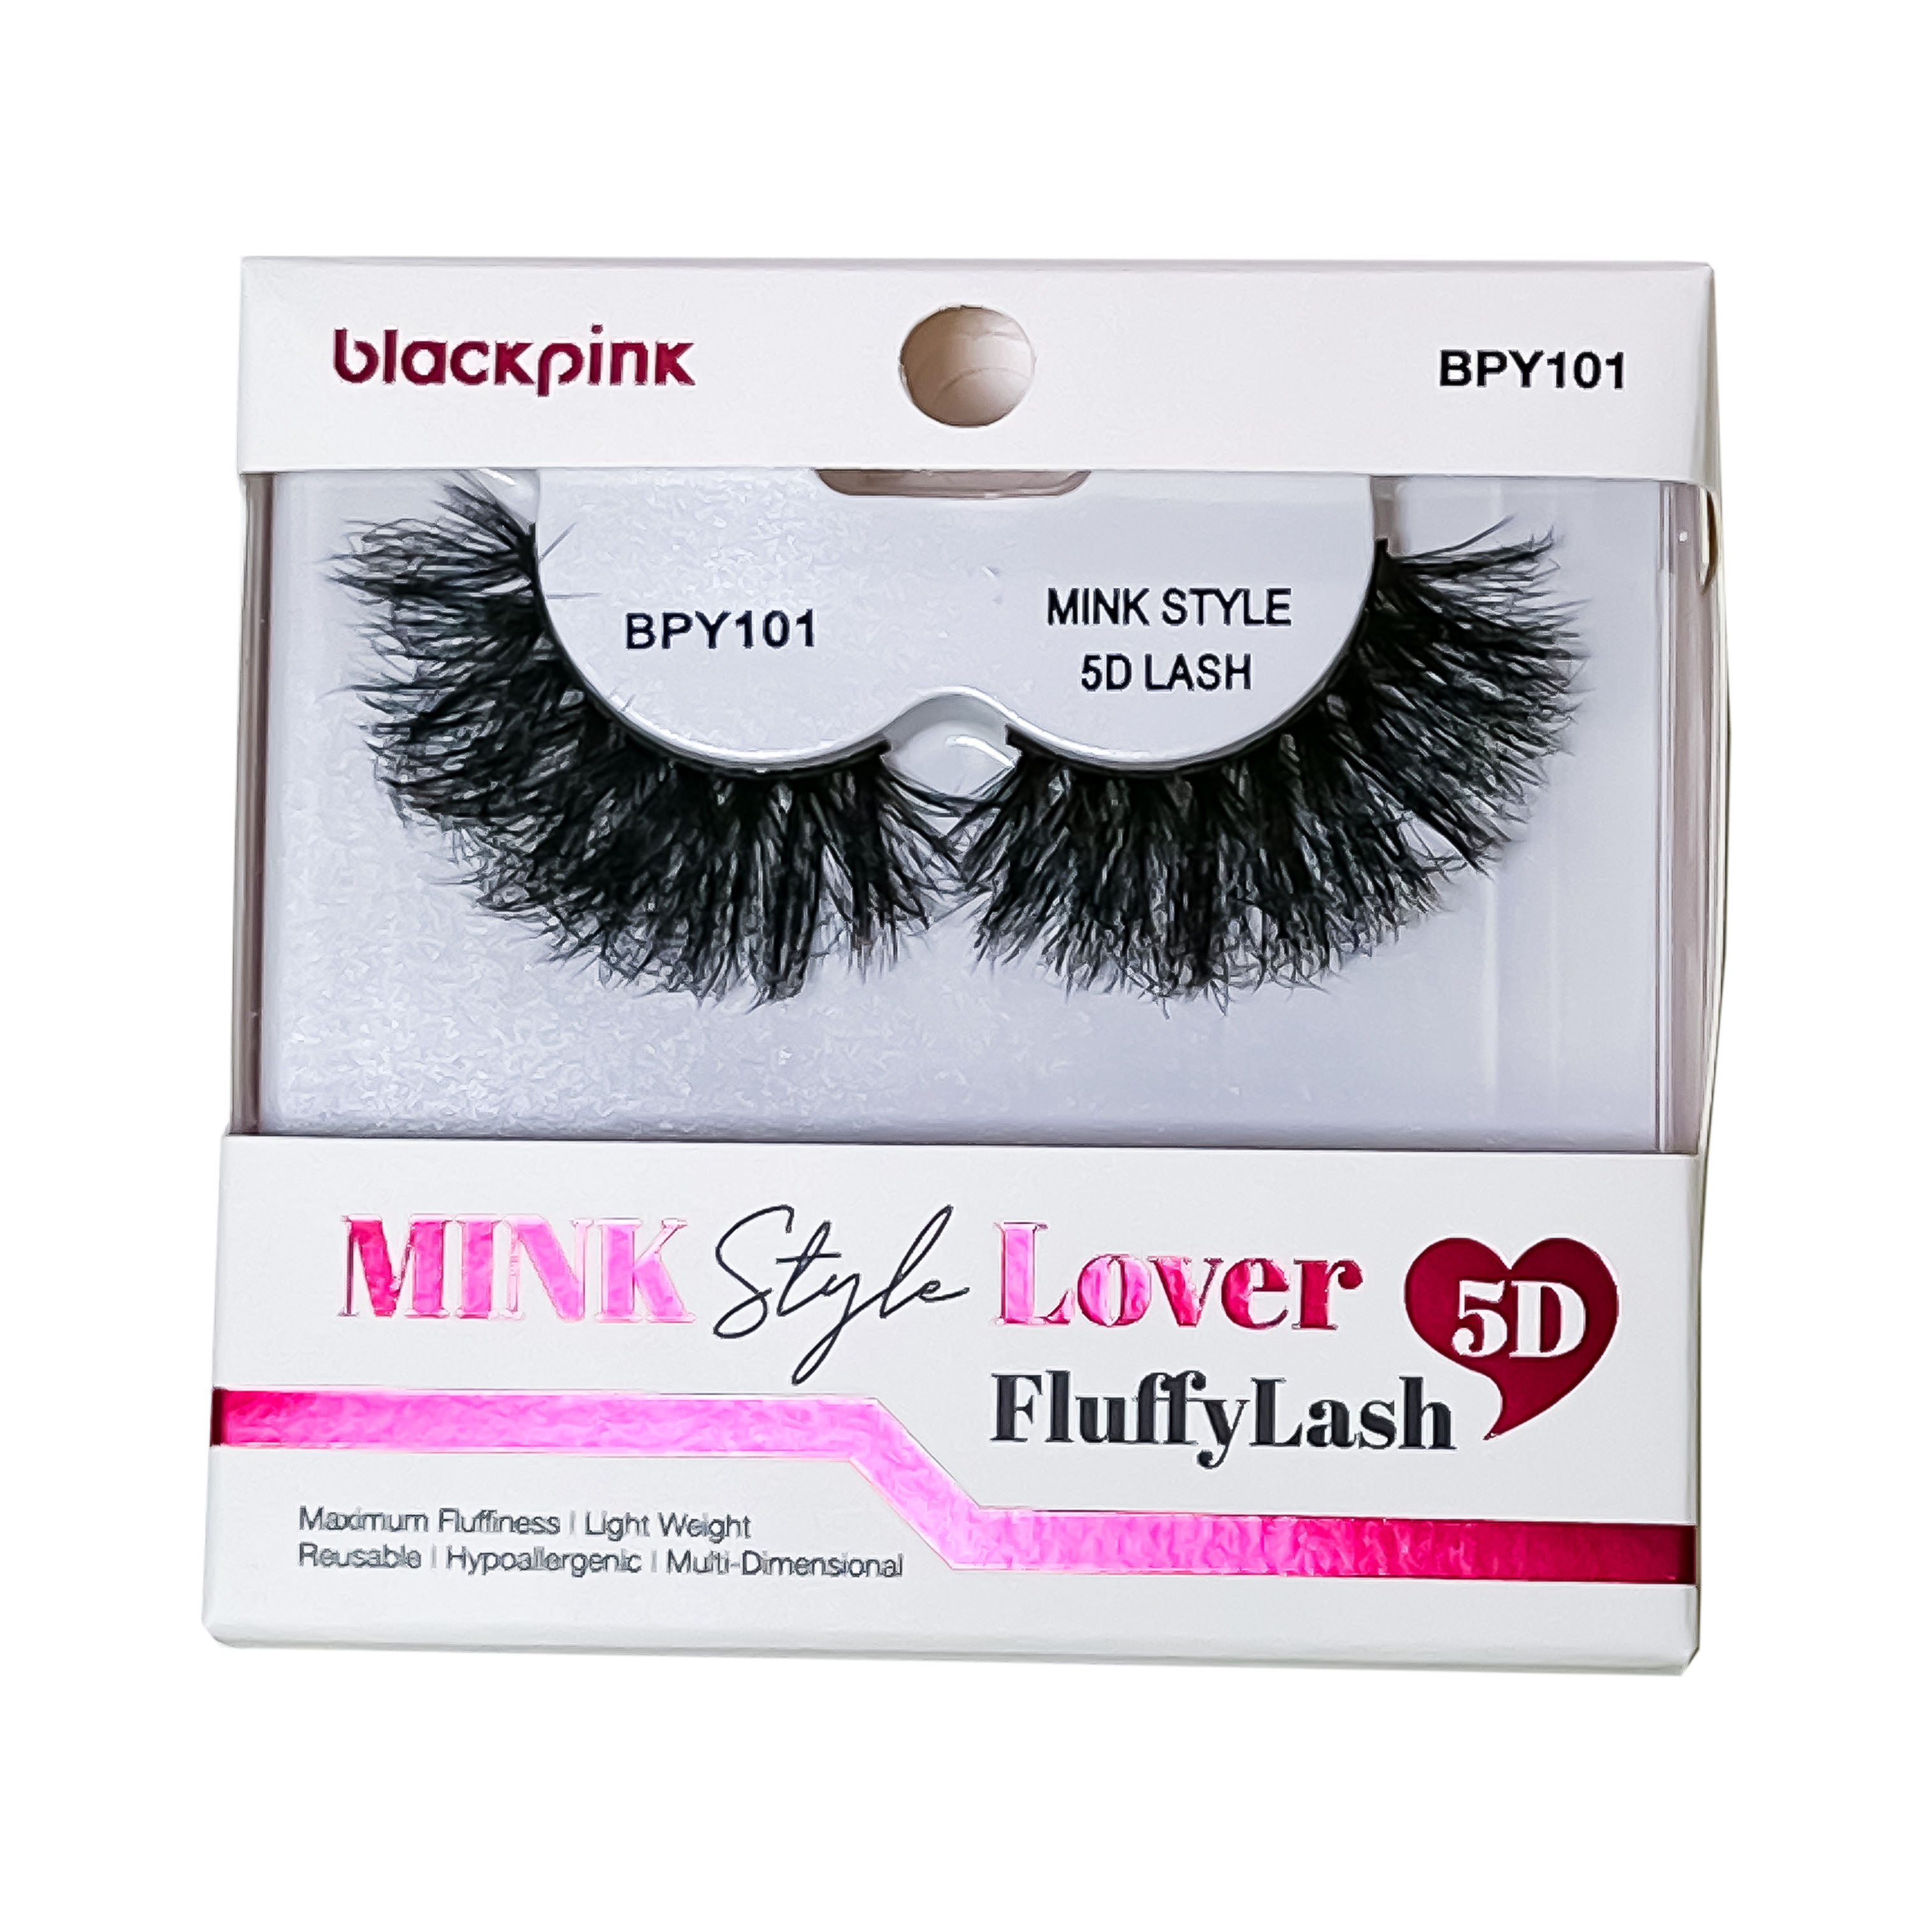 Blackpink 5D Mink Style Lover Fluffy Lash